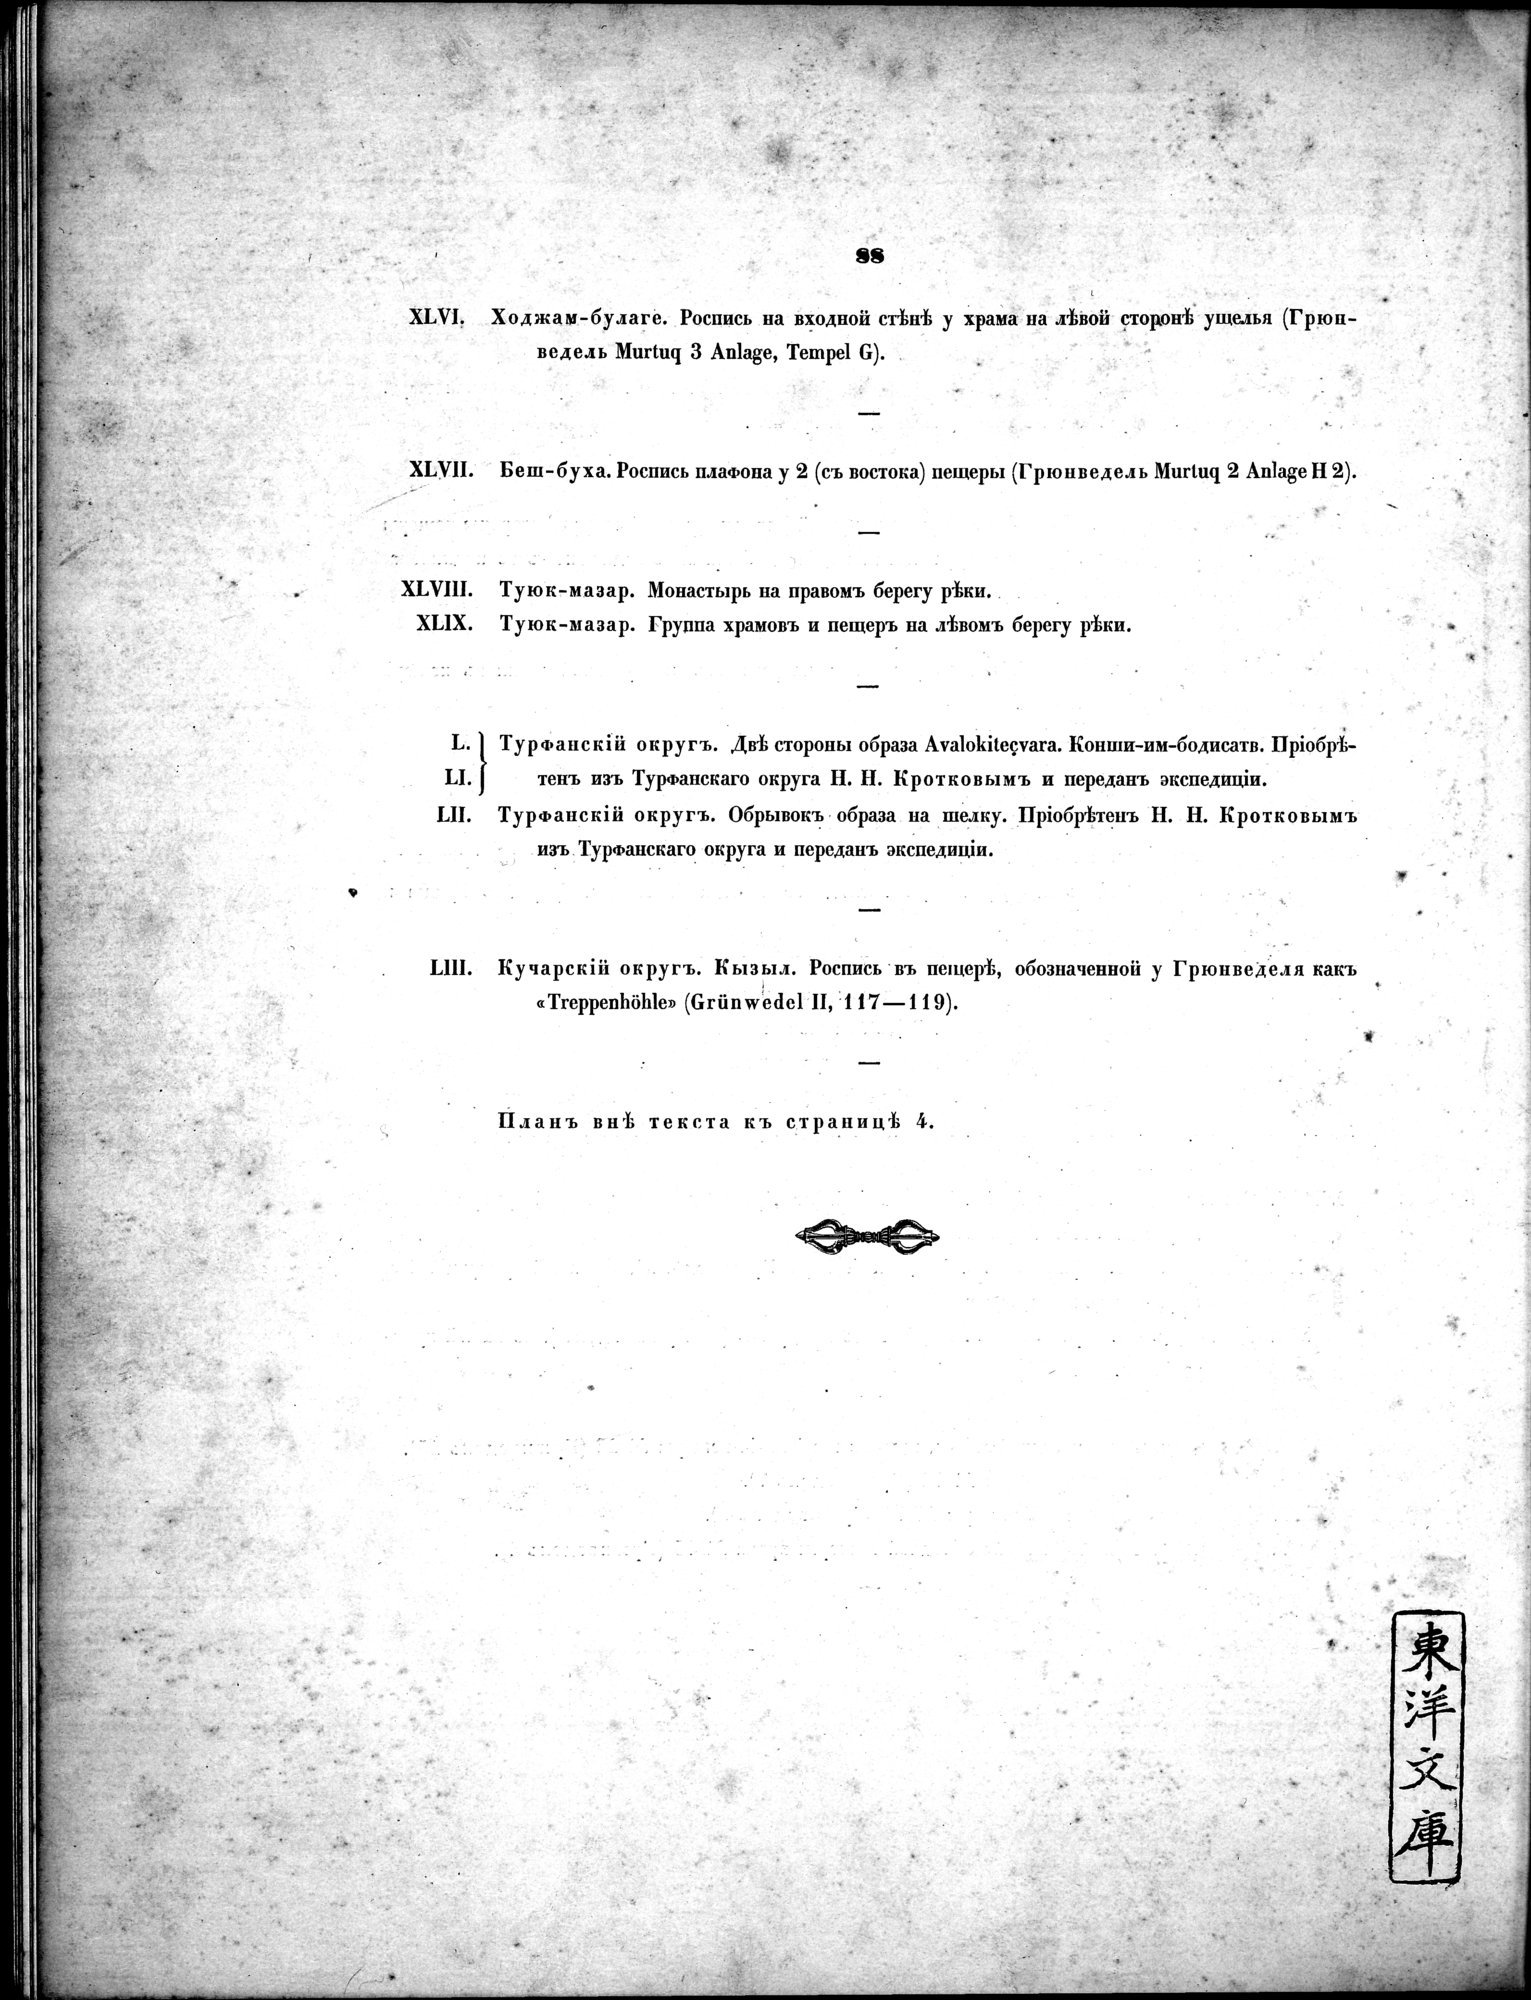 Russkaia Turkestanskaia Ekspeditsiia, 1909-1910 goda : vol.1 / Page 102 (Grayscale High Resolution Image)